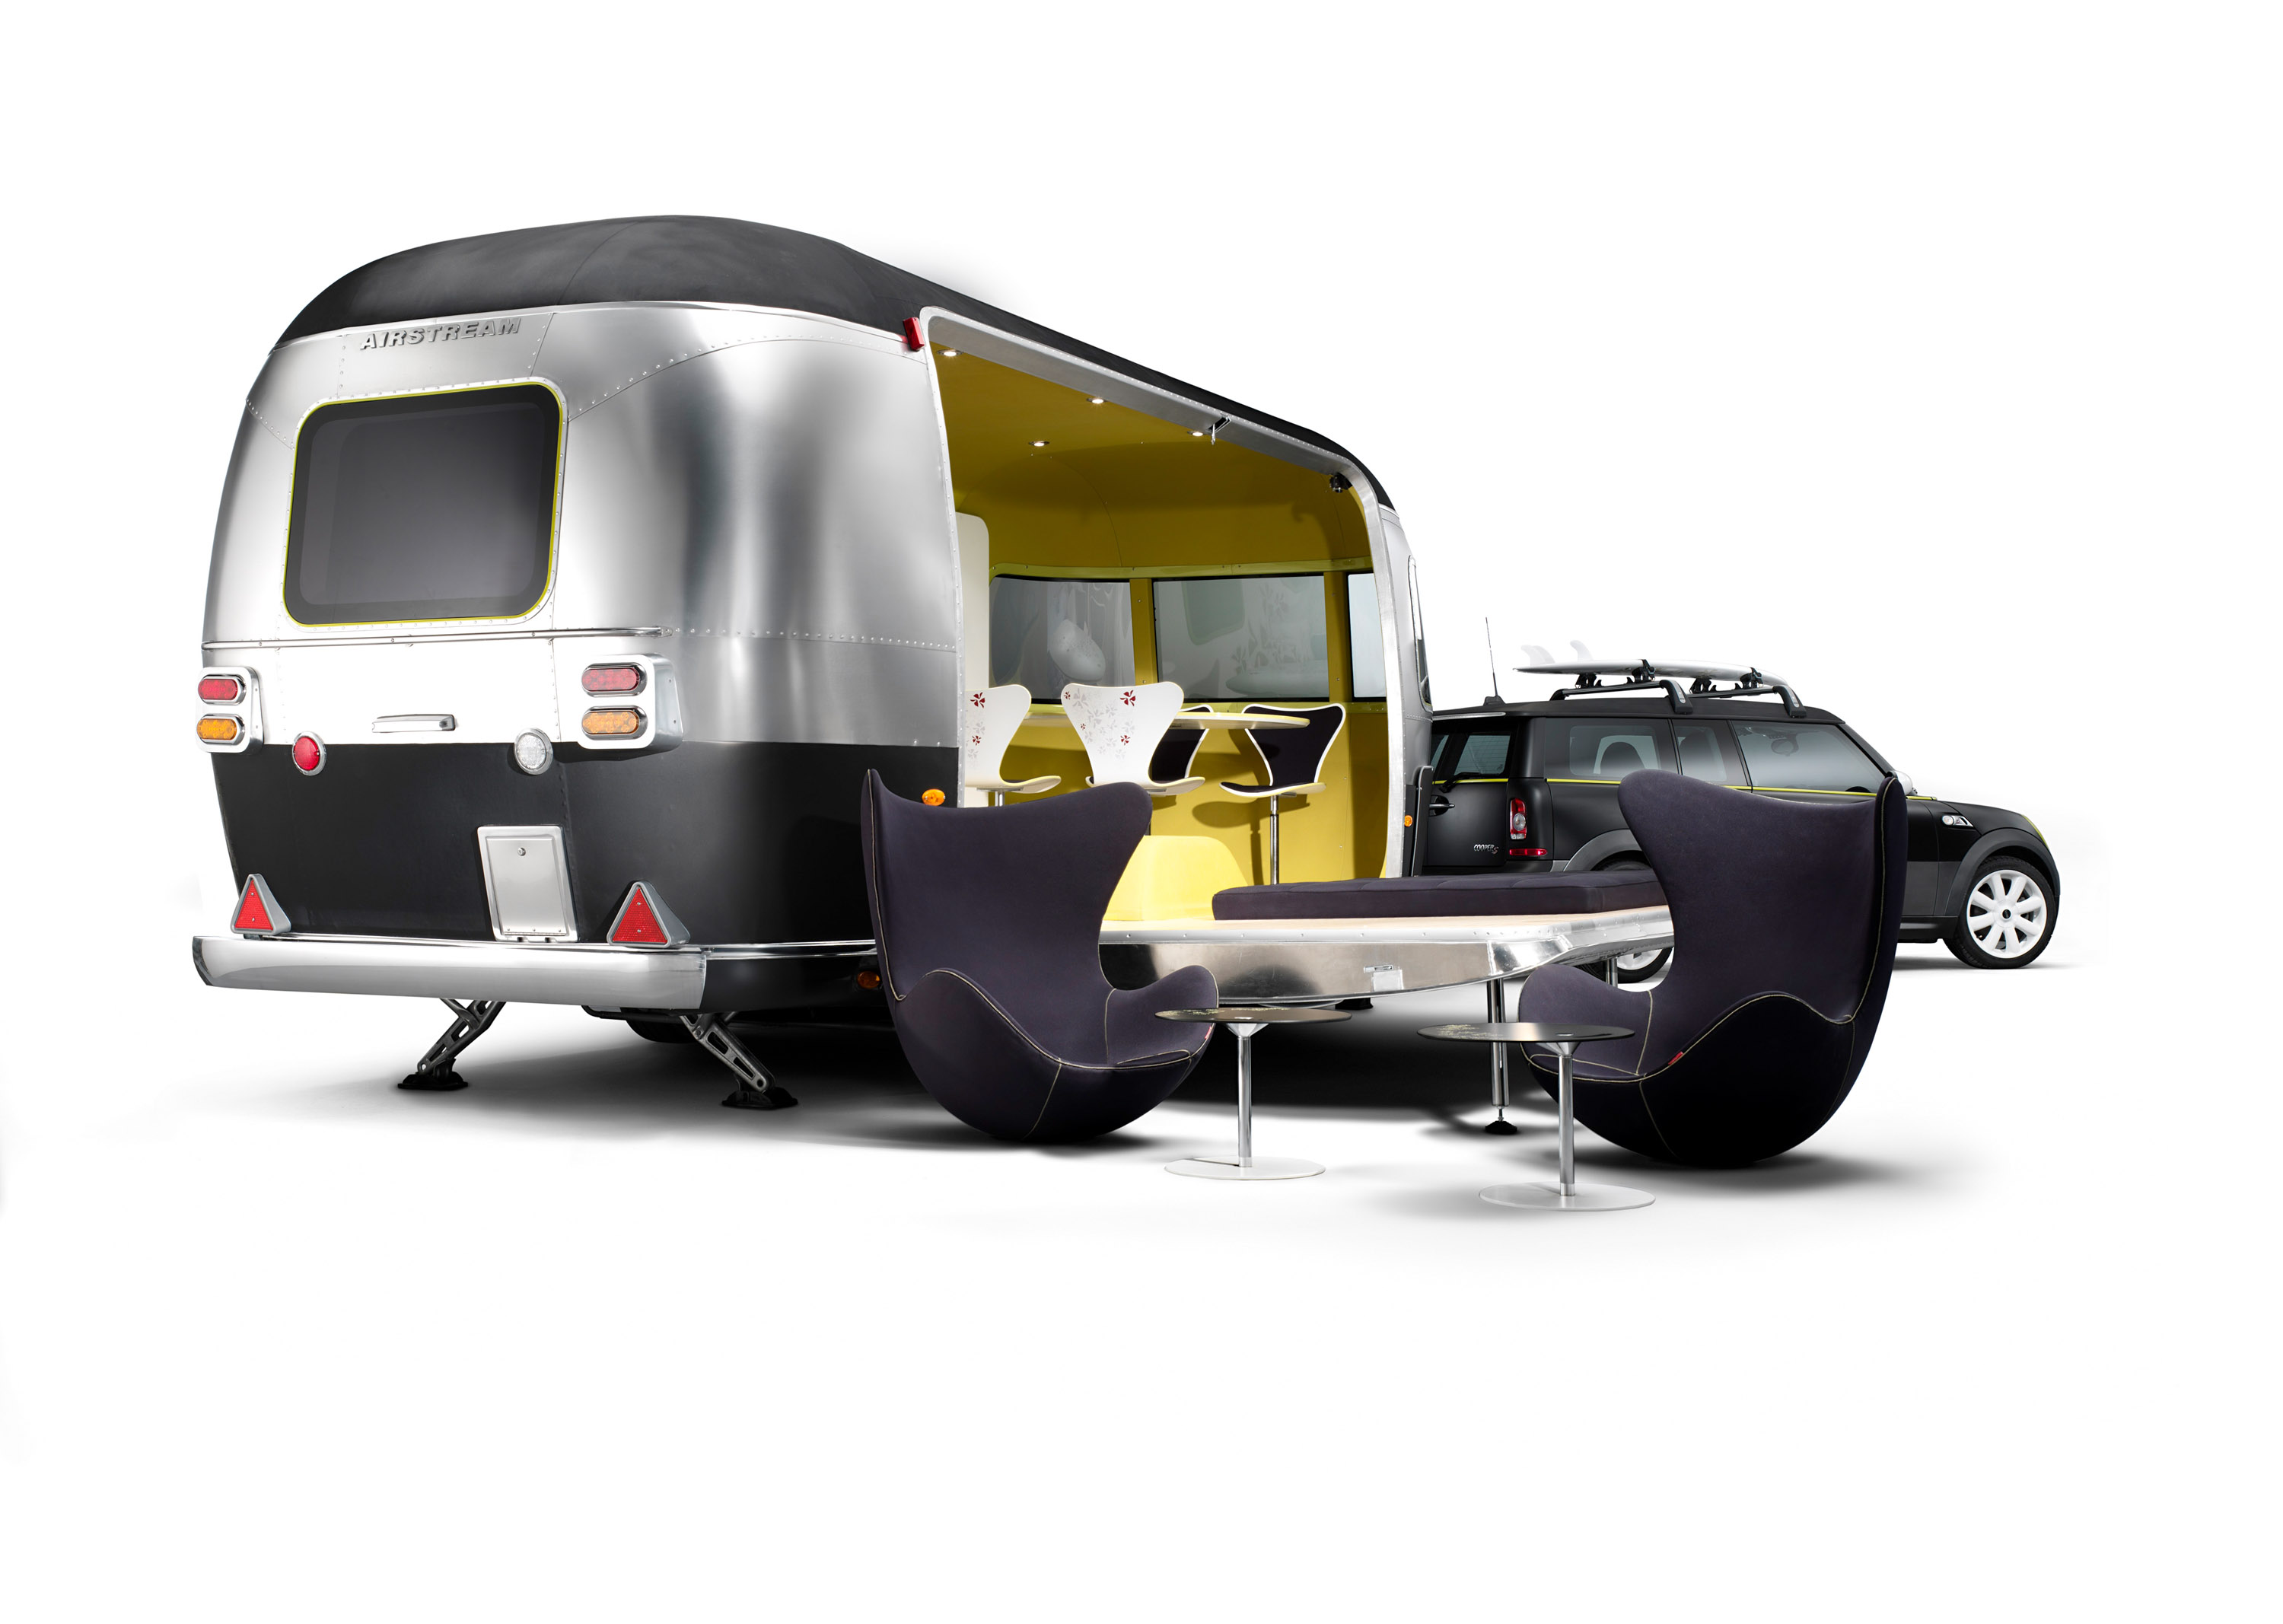 MINI and Airstream-designed by Republic of Fritz Hansen